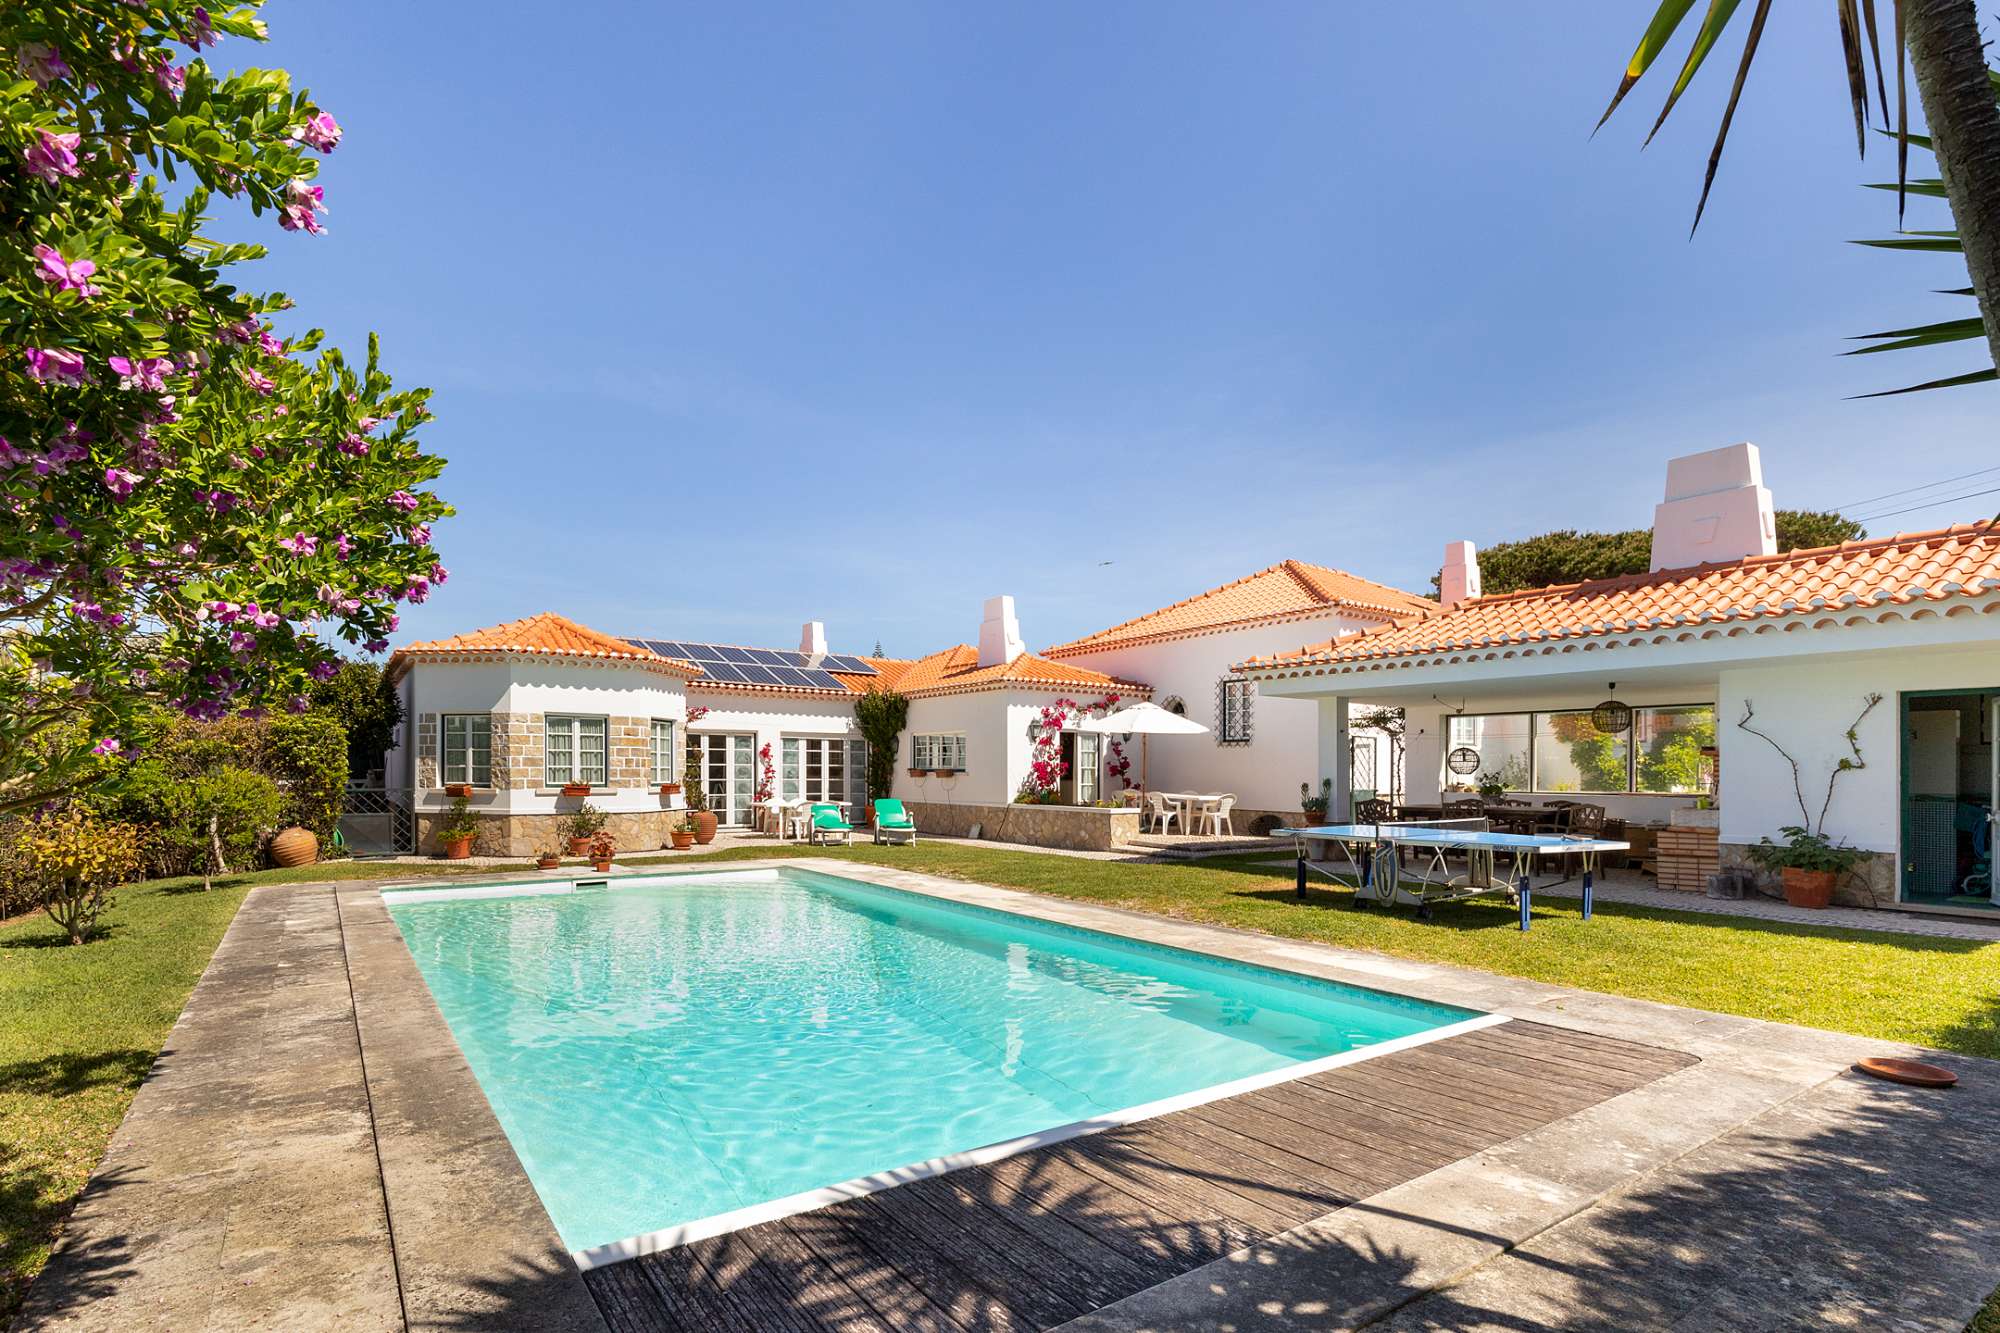 4-bedroom house with garden and swimming pool, Praia das Maças, Sintra